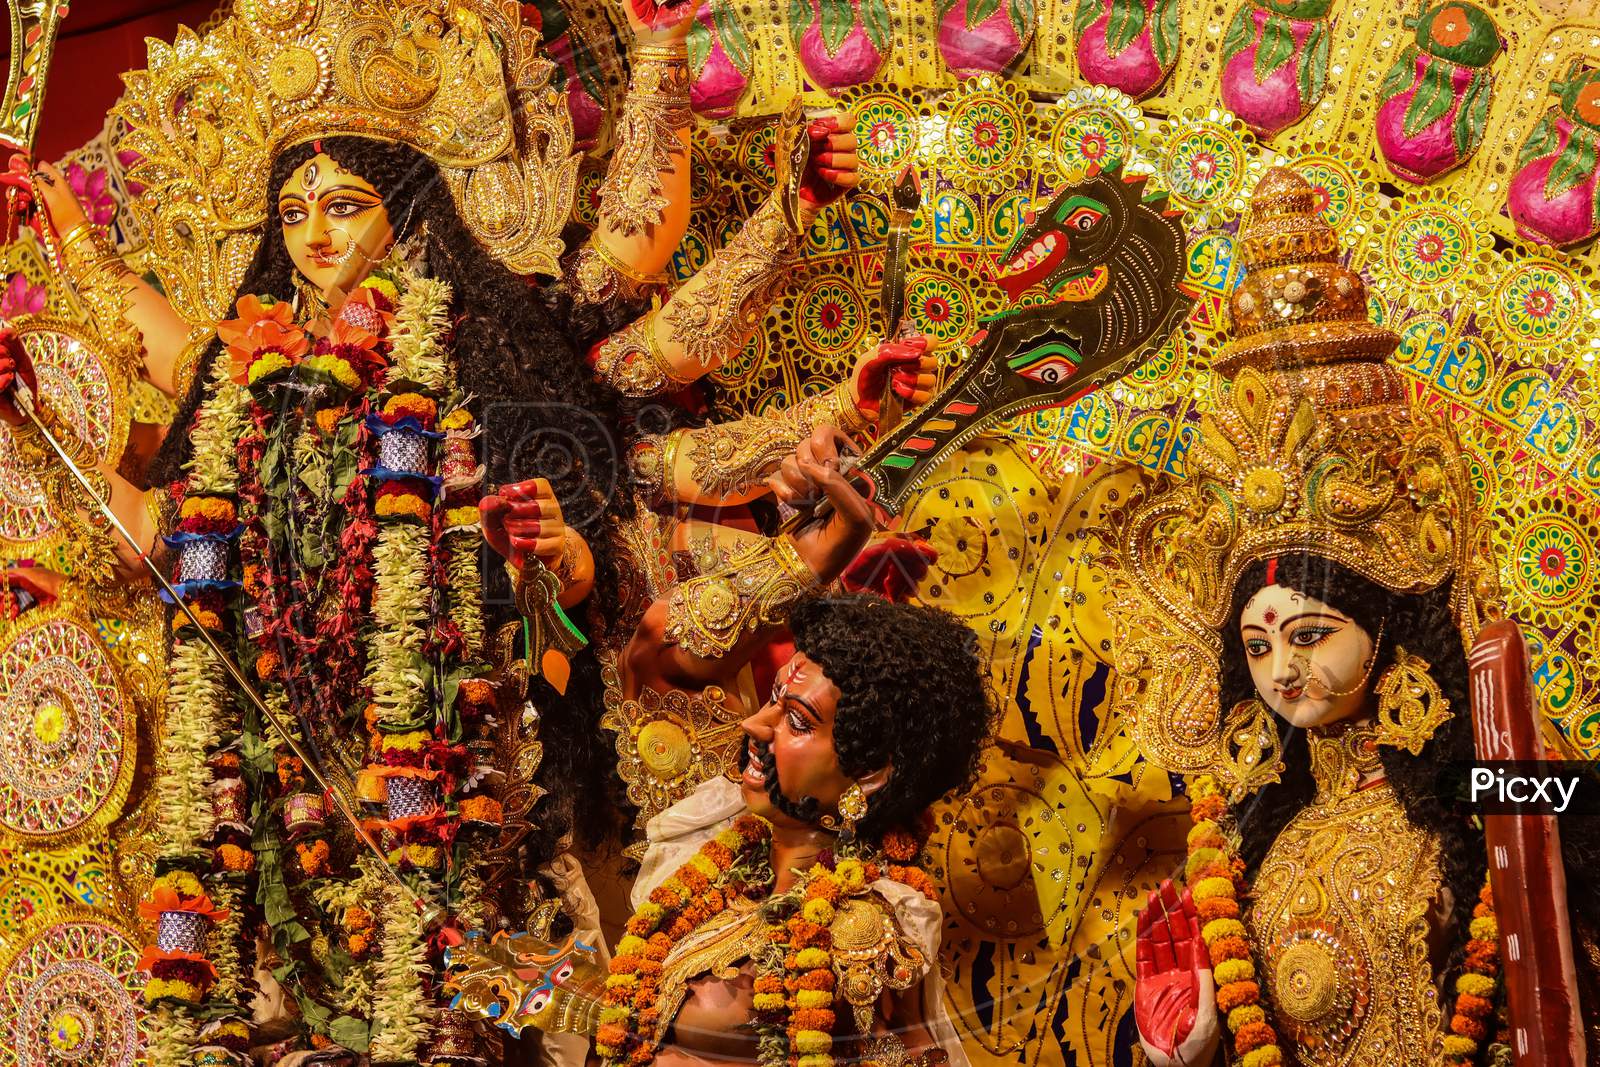 Goddess Durga during the festival of Durga Puja